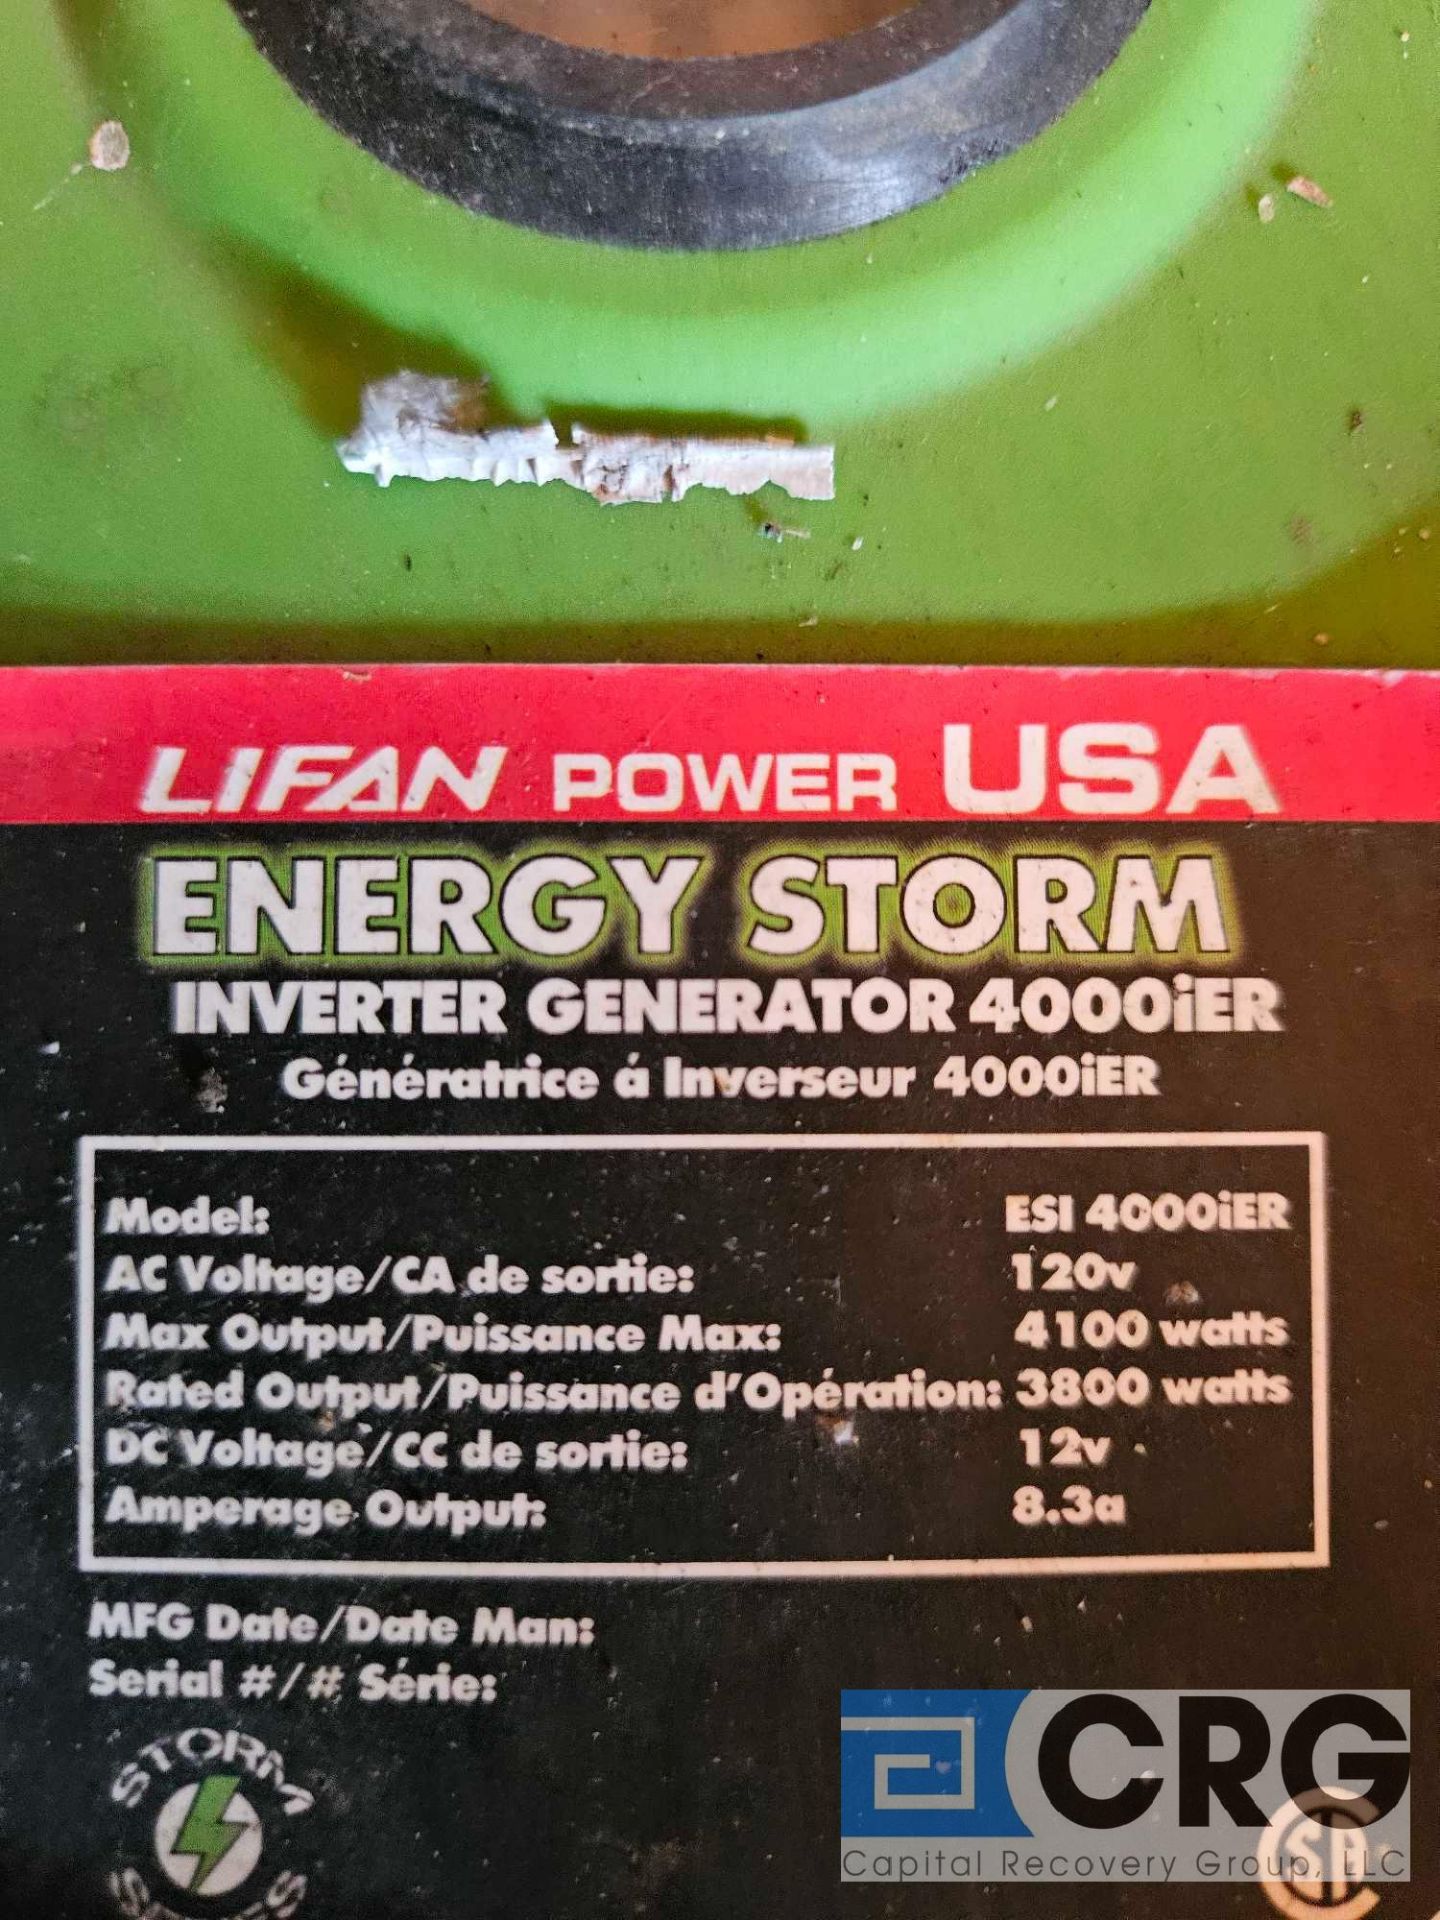 Energy Storm Generator - Image 4 of 4